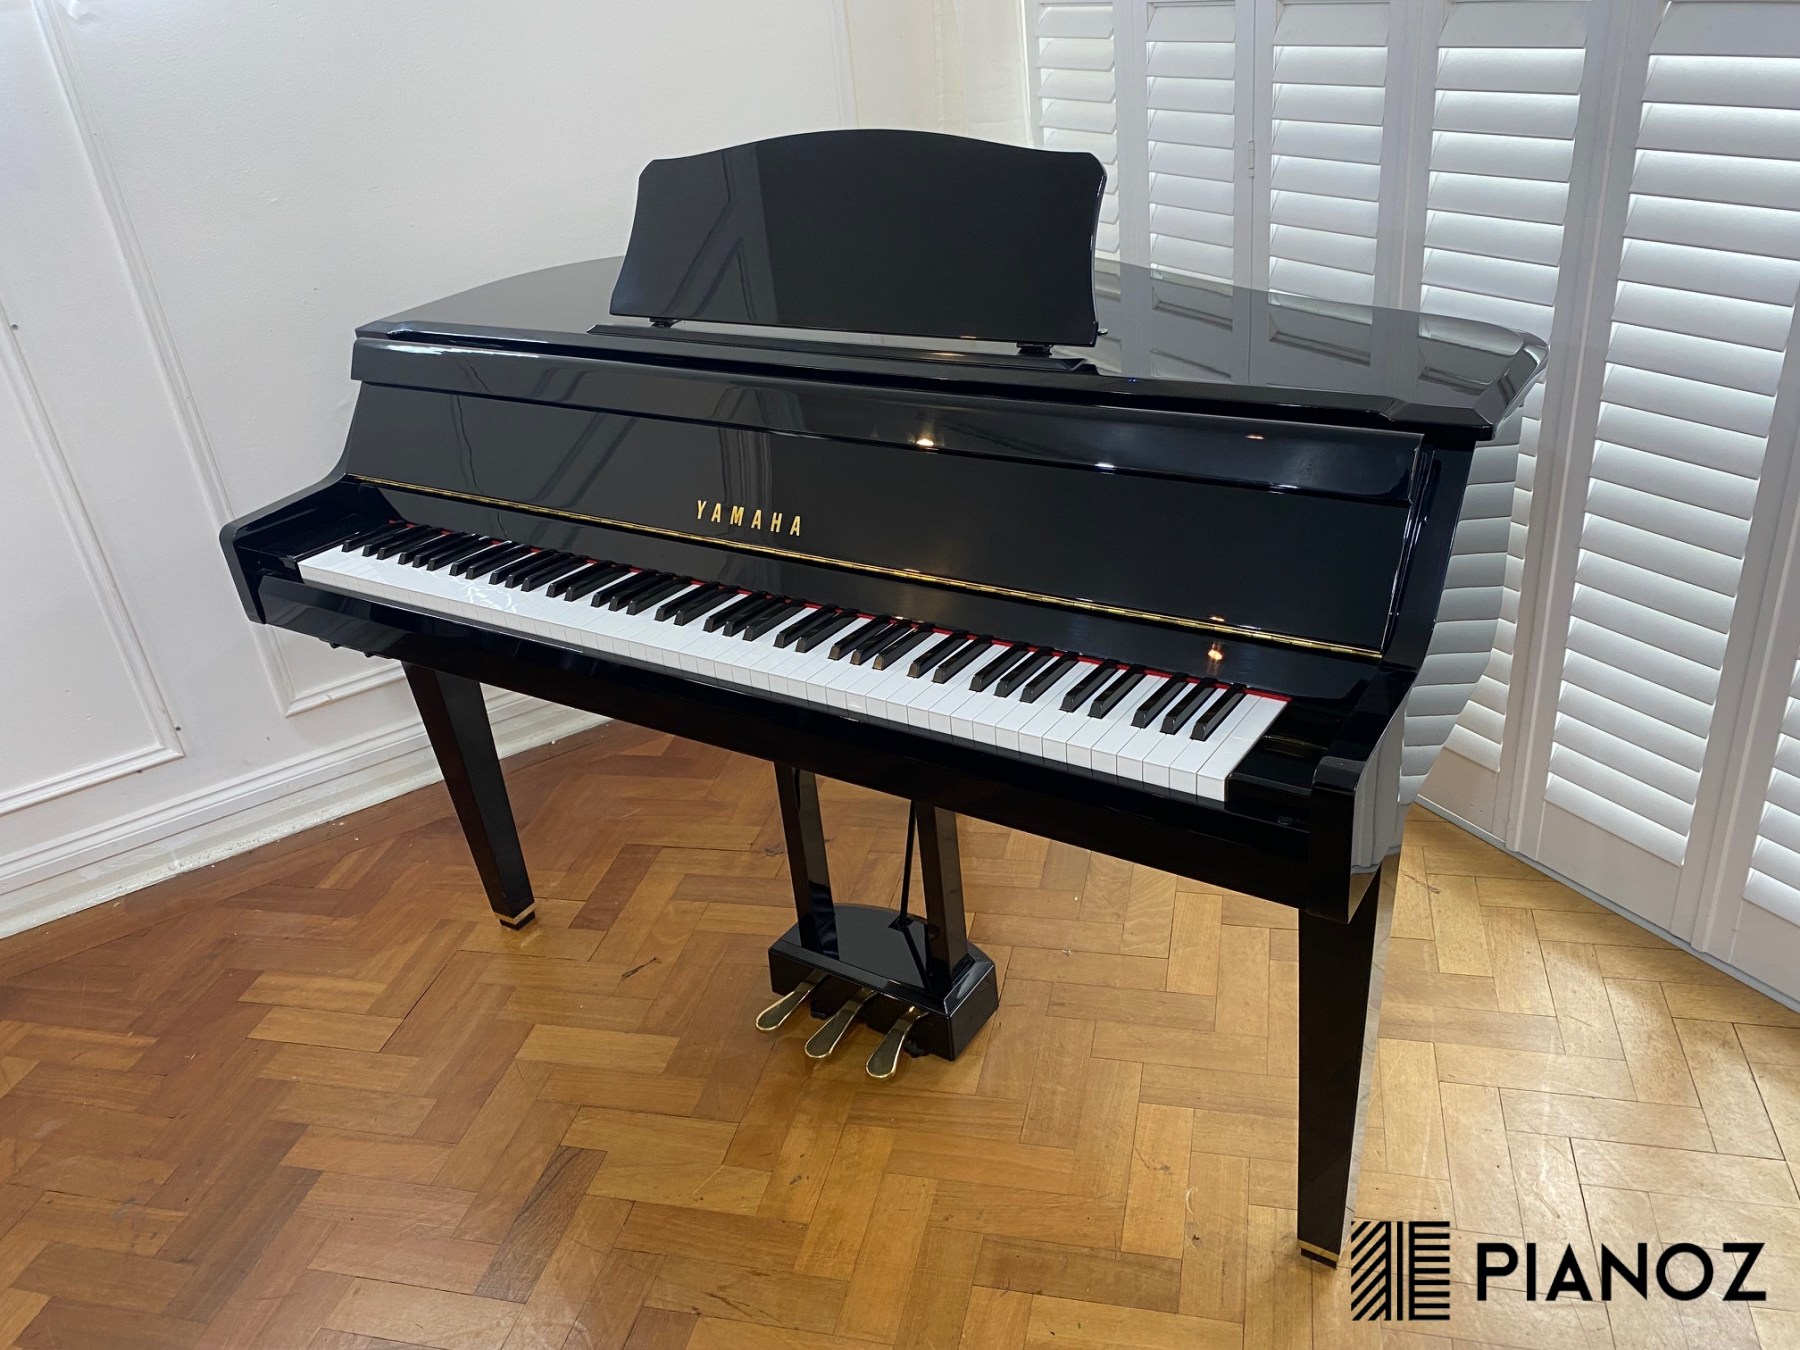 Yamaha Hybrid Digital Baby Grand Piano piano for sale in UK